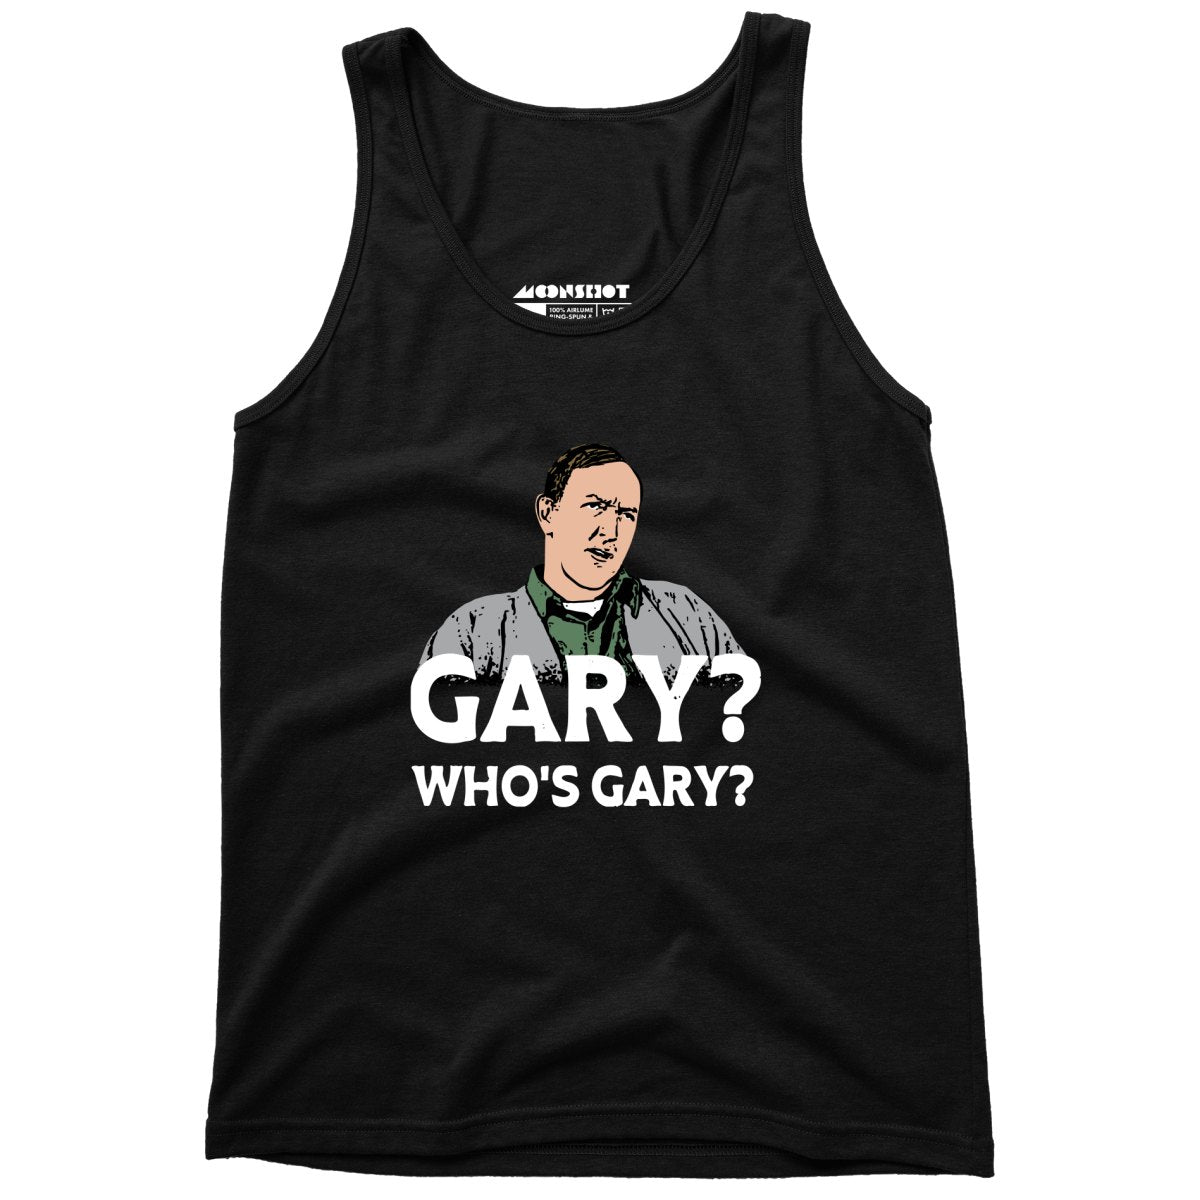 Gary? Who's Gary? - Unisex Tank Top